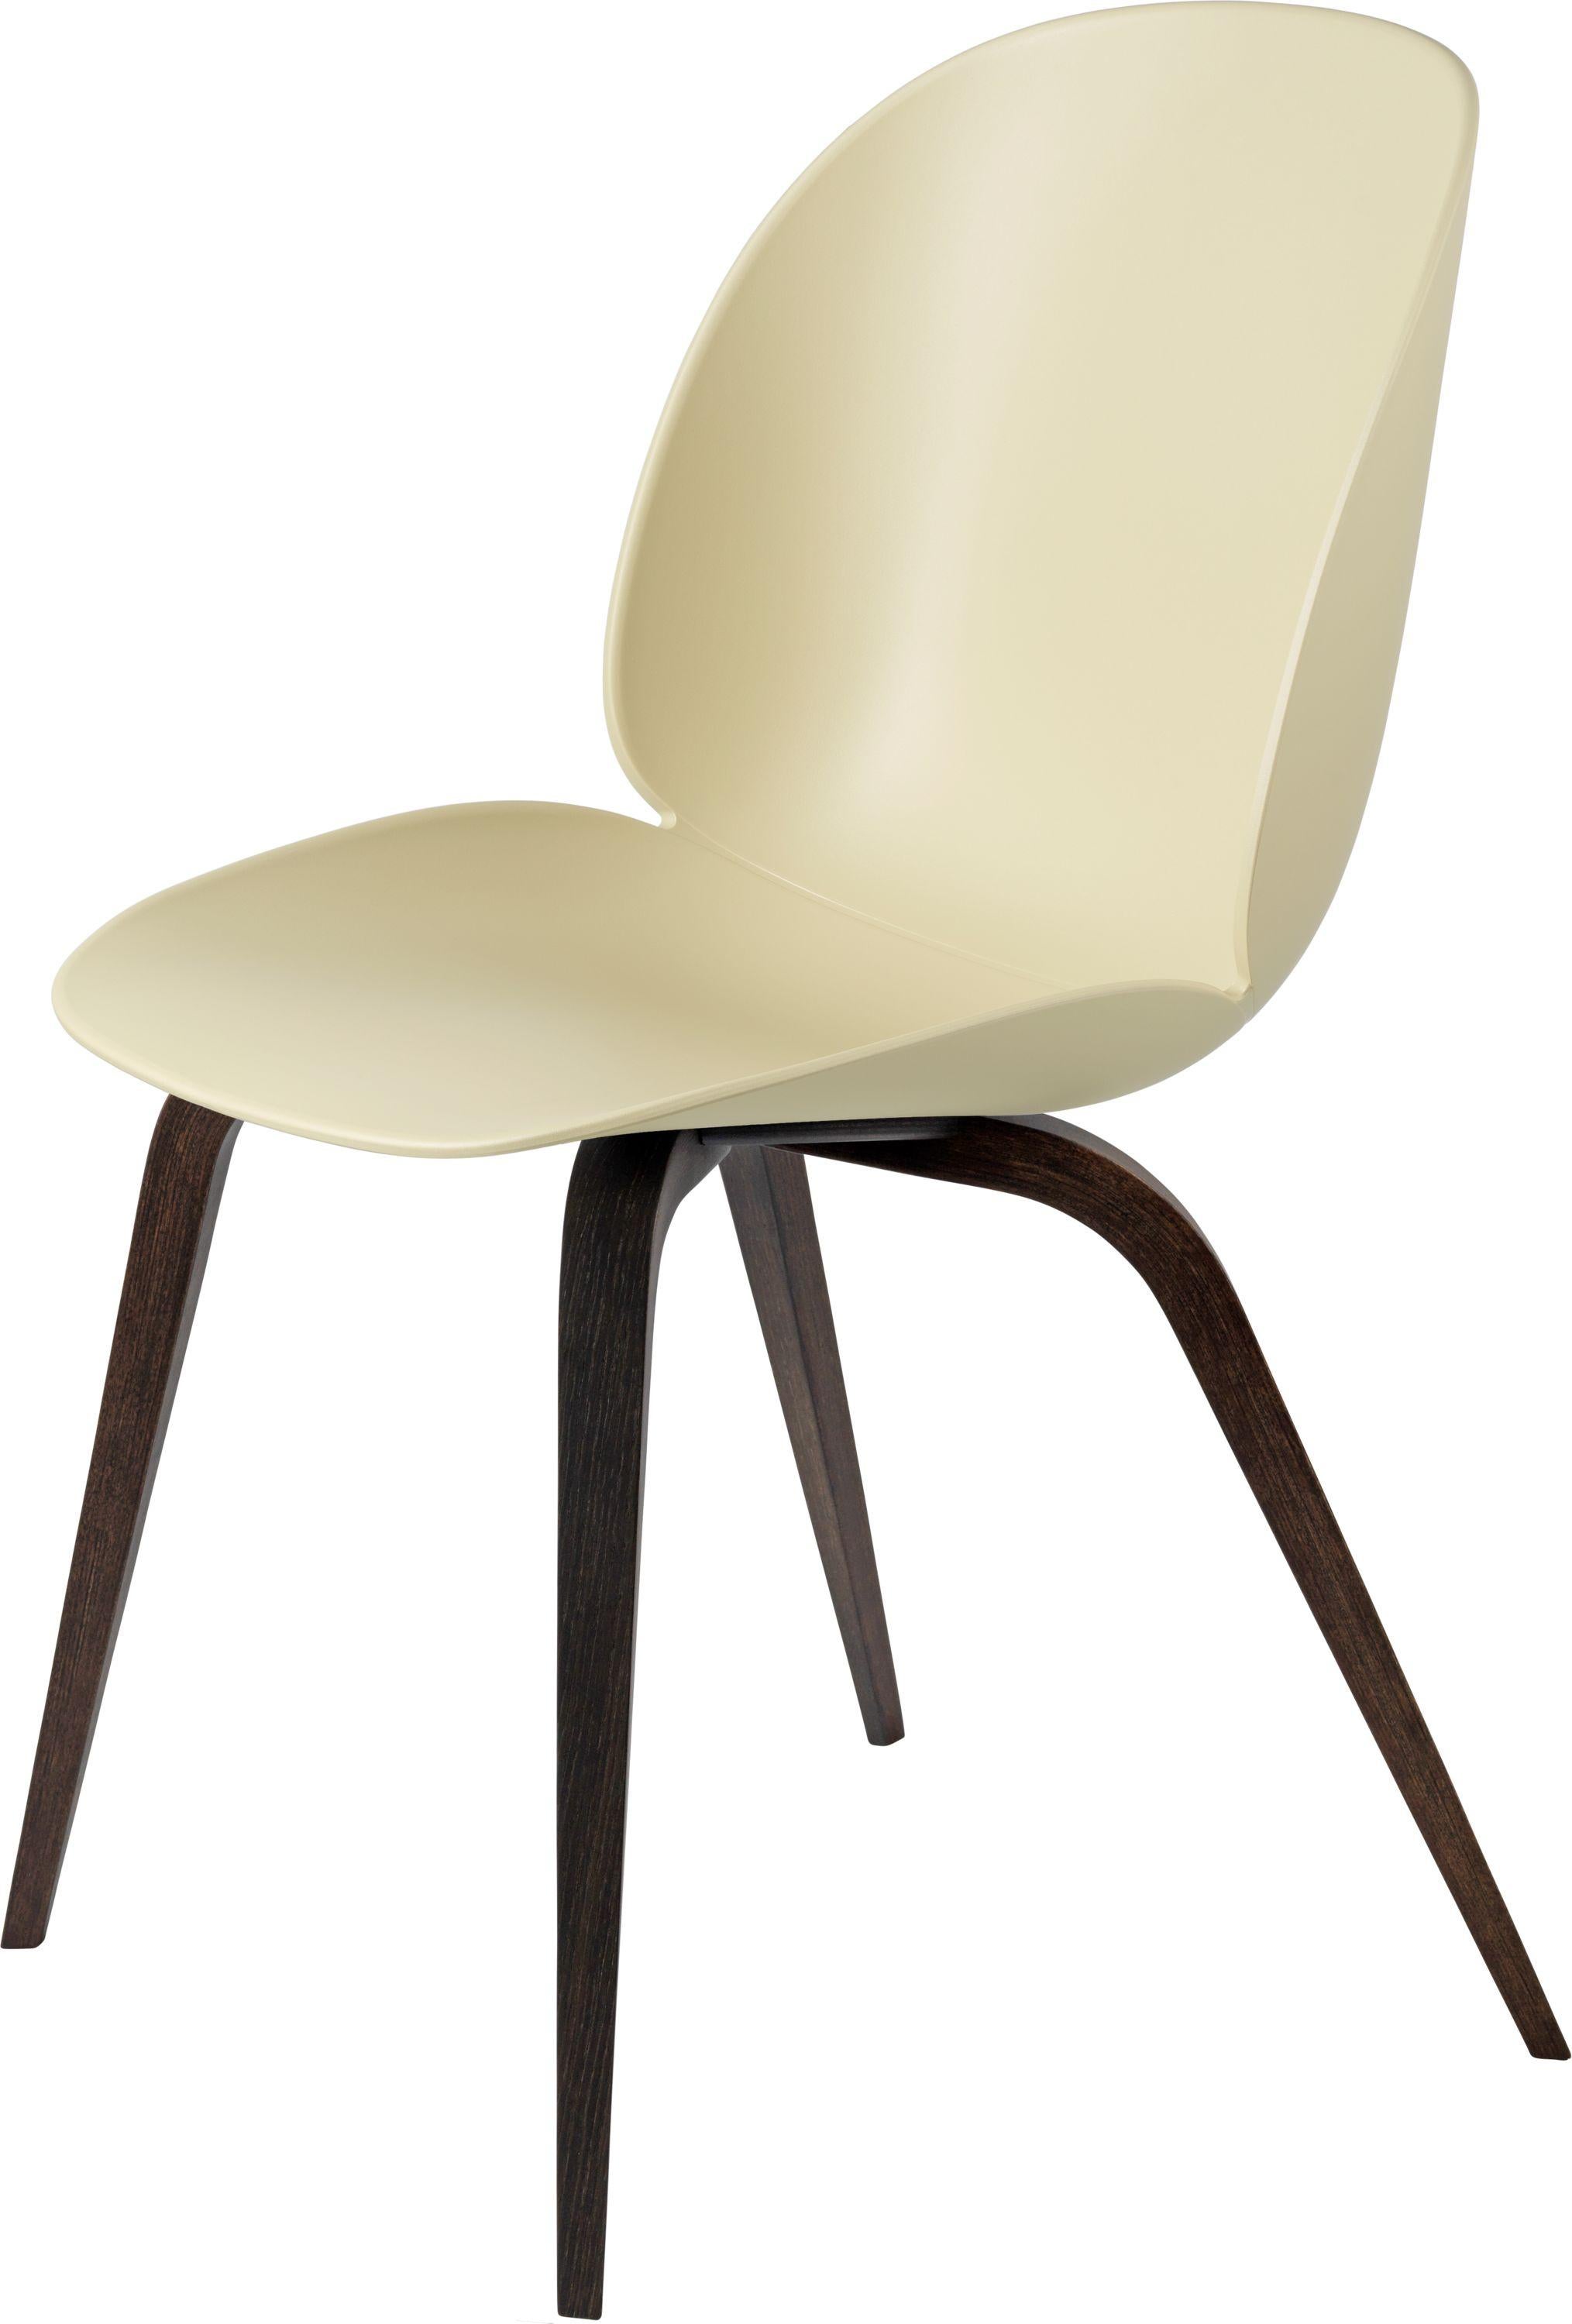 Danish GamFratesi 'Beetle' Dining Chair with Smoked Oak Conic Base